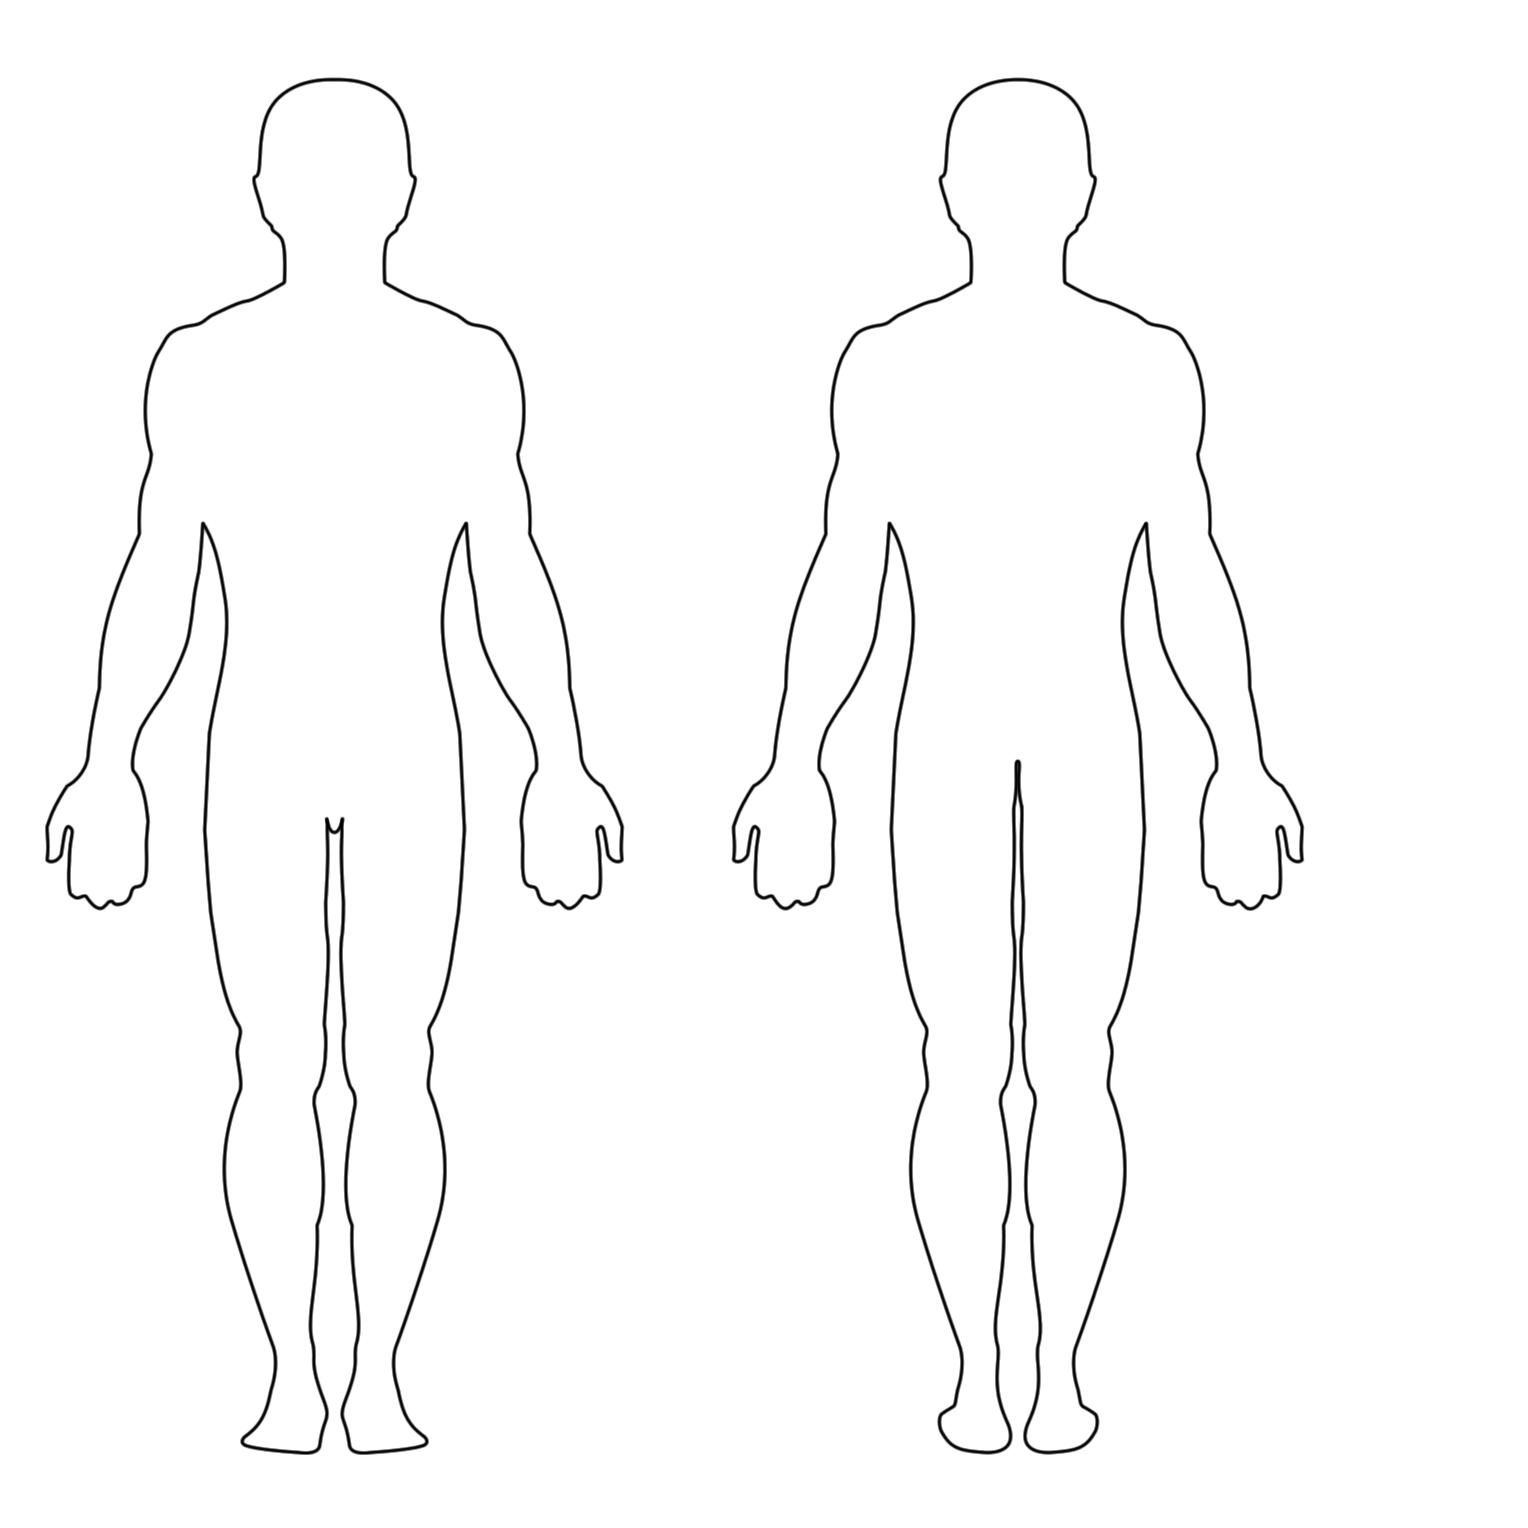 Outline download. Контур тела человека спереди. Контур человеческого тела. Человек схематично.